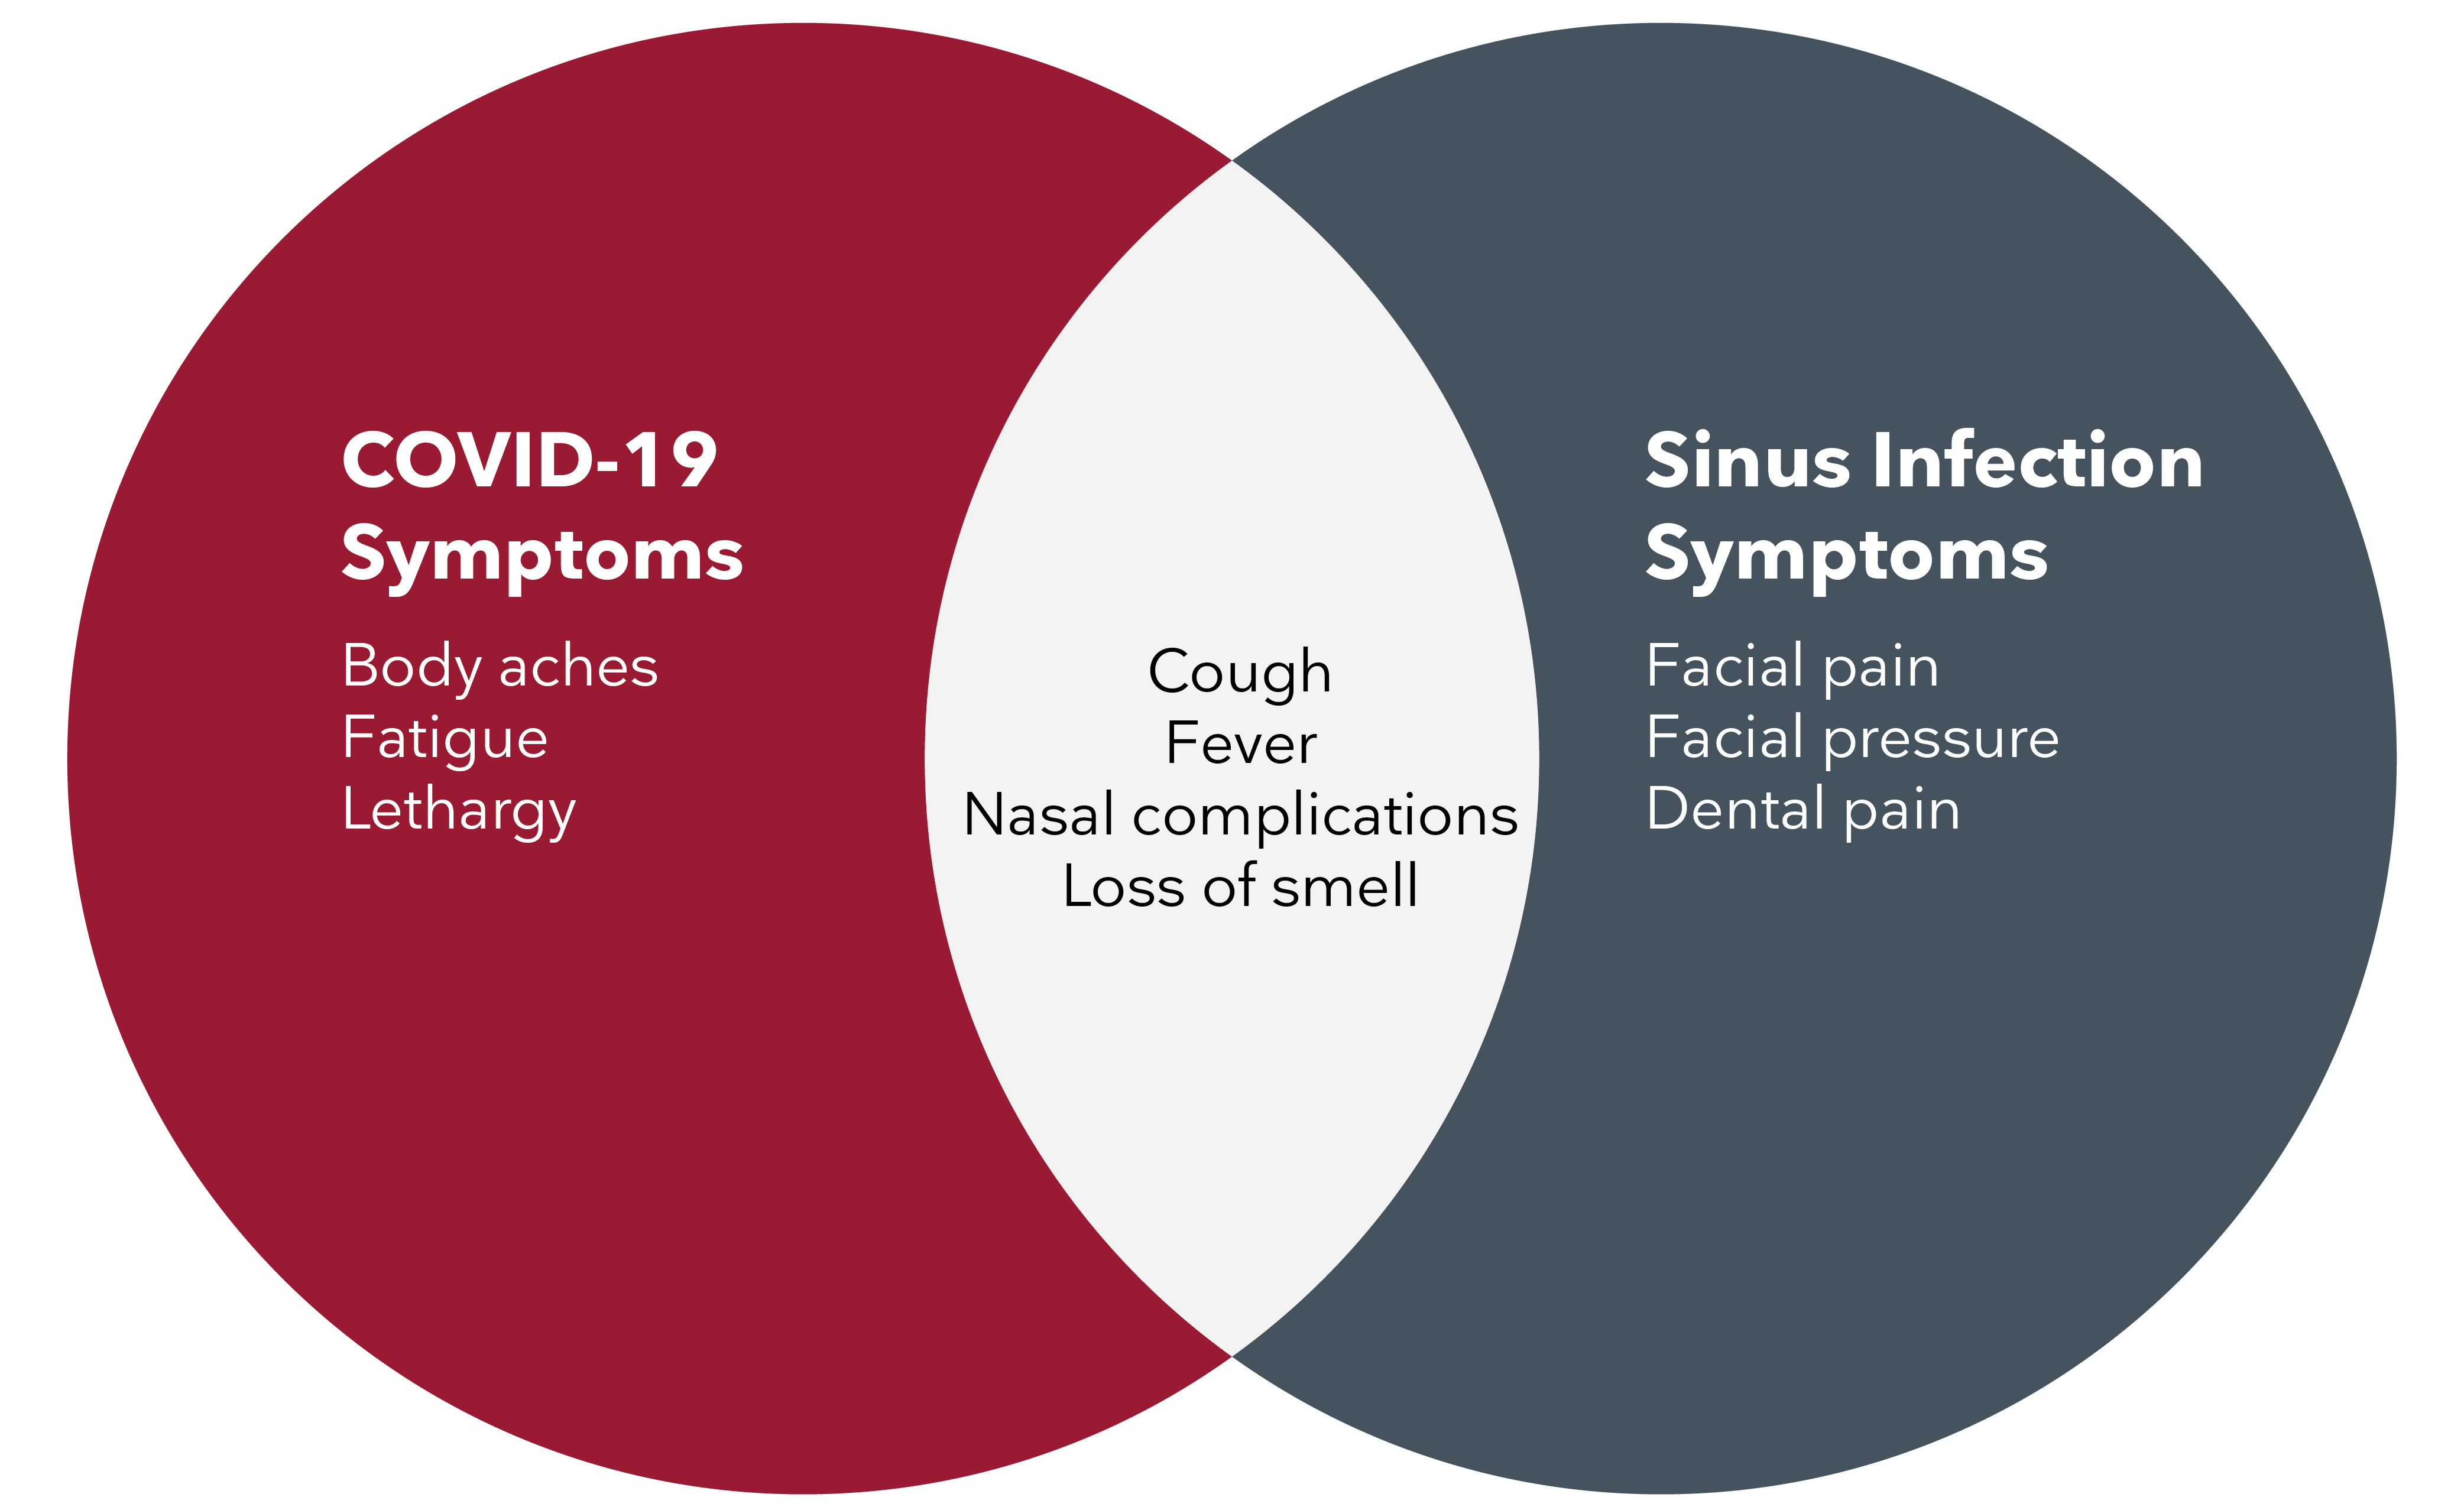 Breakdown comparing the novel coronavirus and sinus infections.